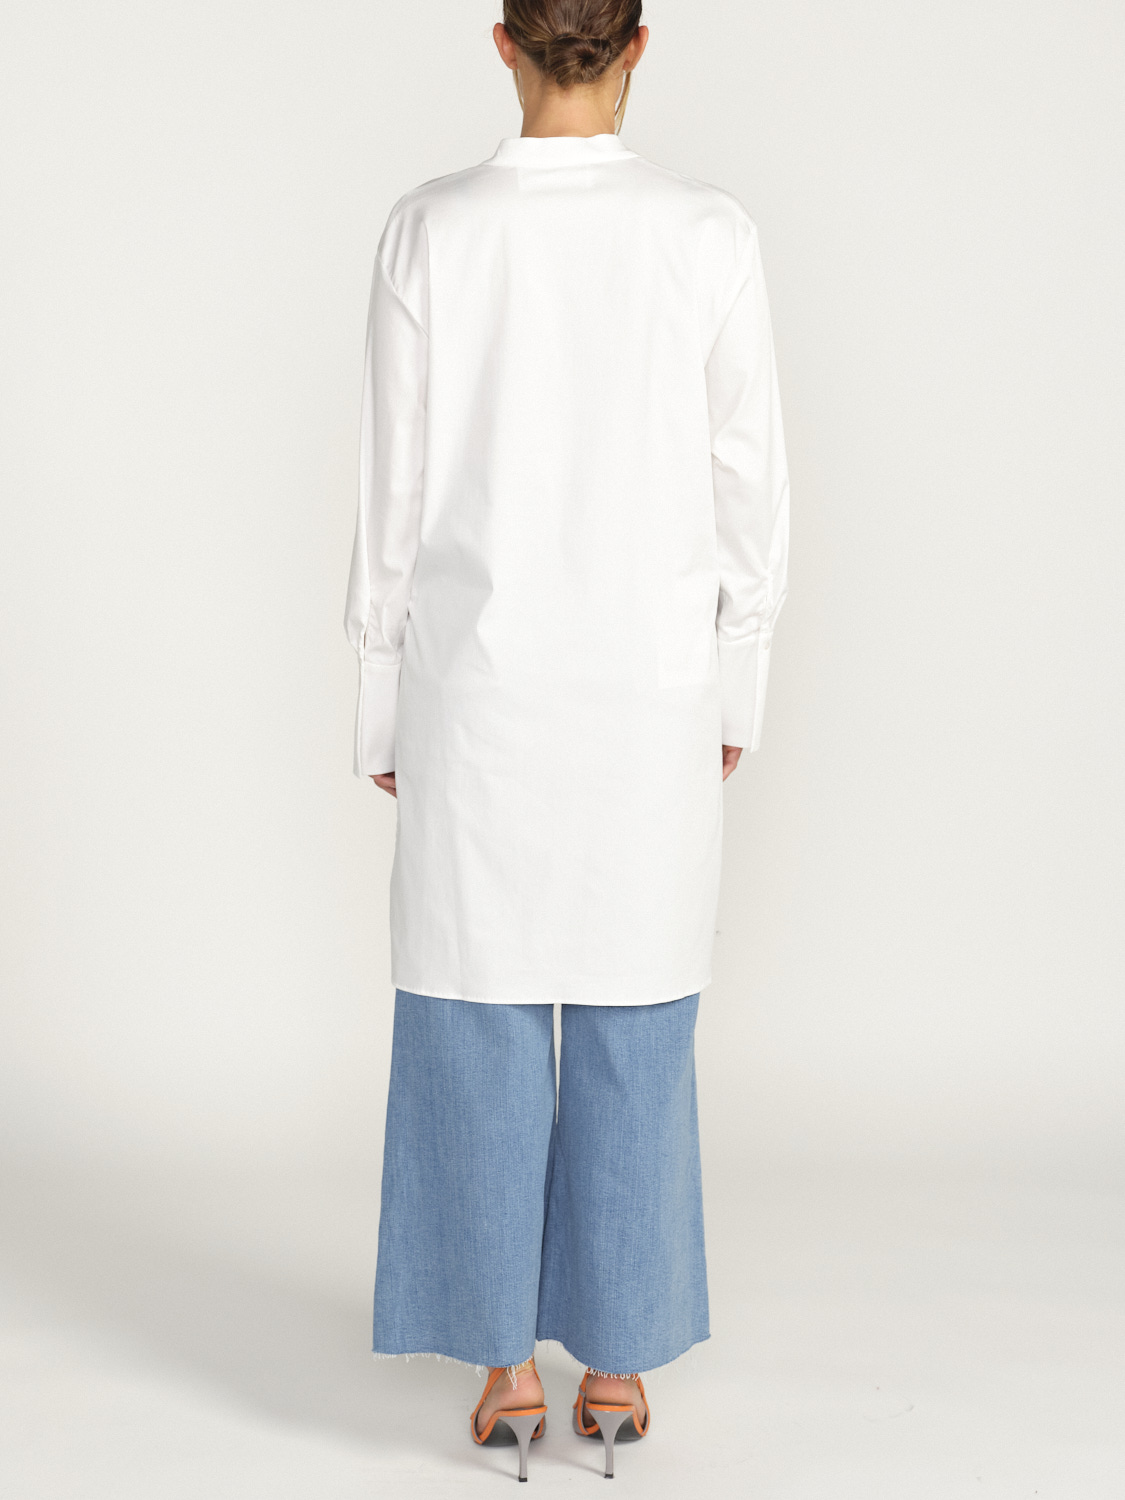 Eva Mann Margit – long blouse with half button placket   white 40